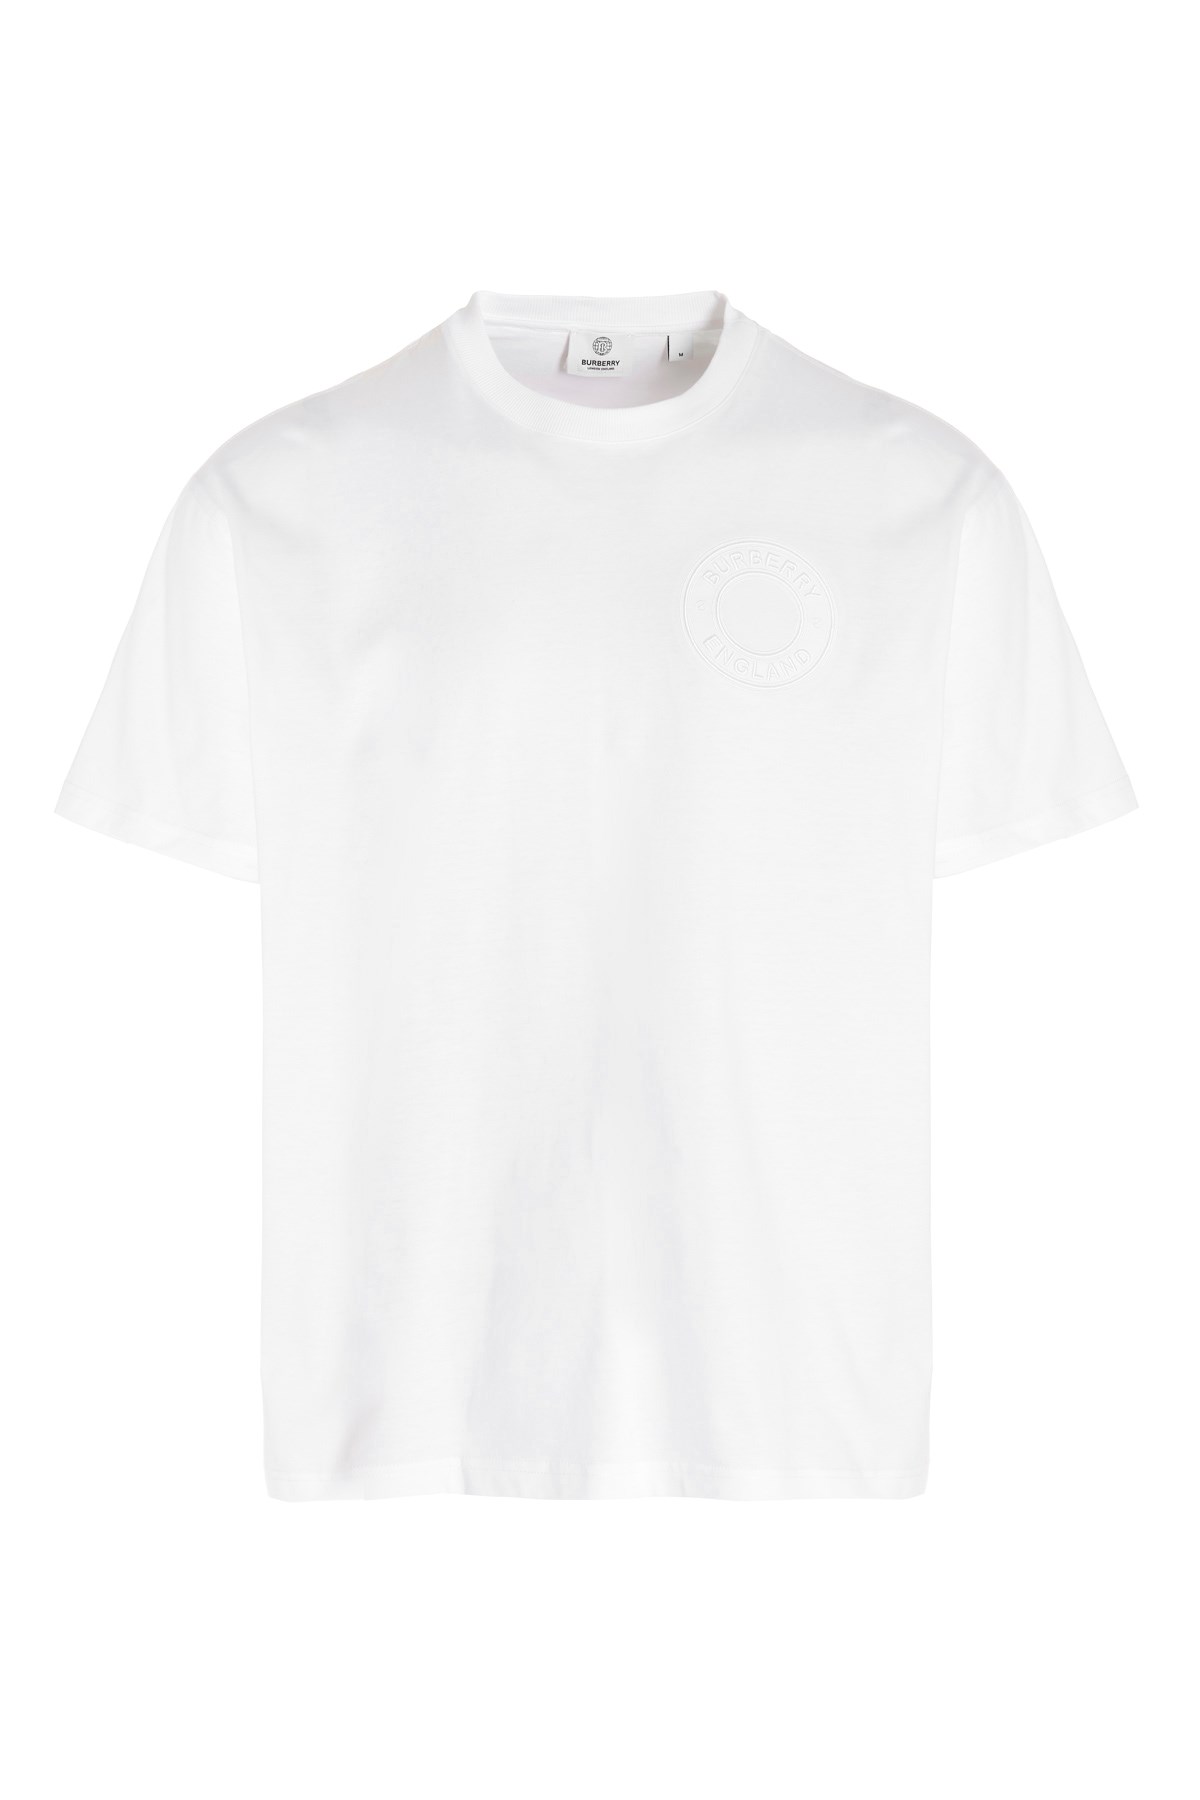 BURBERRY ‘Ronin’ T-Shirt